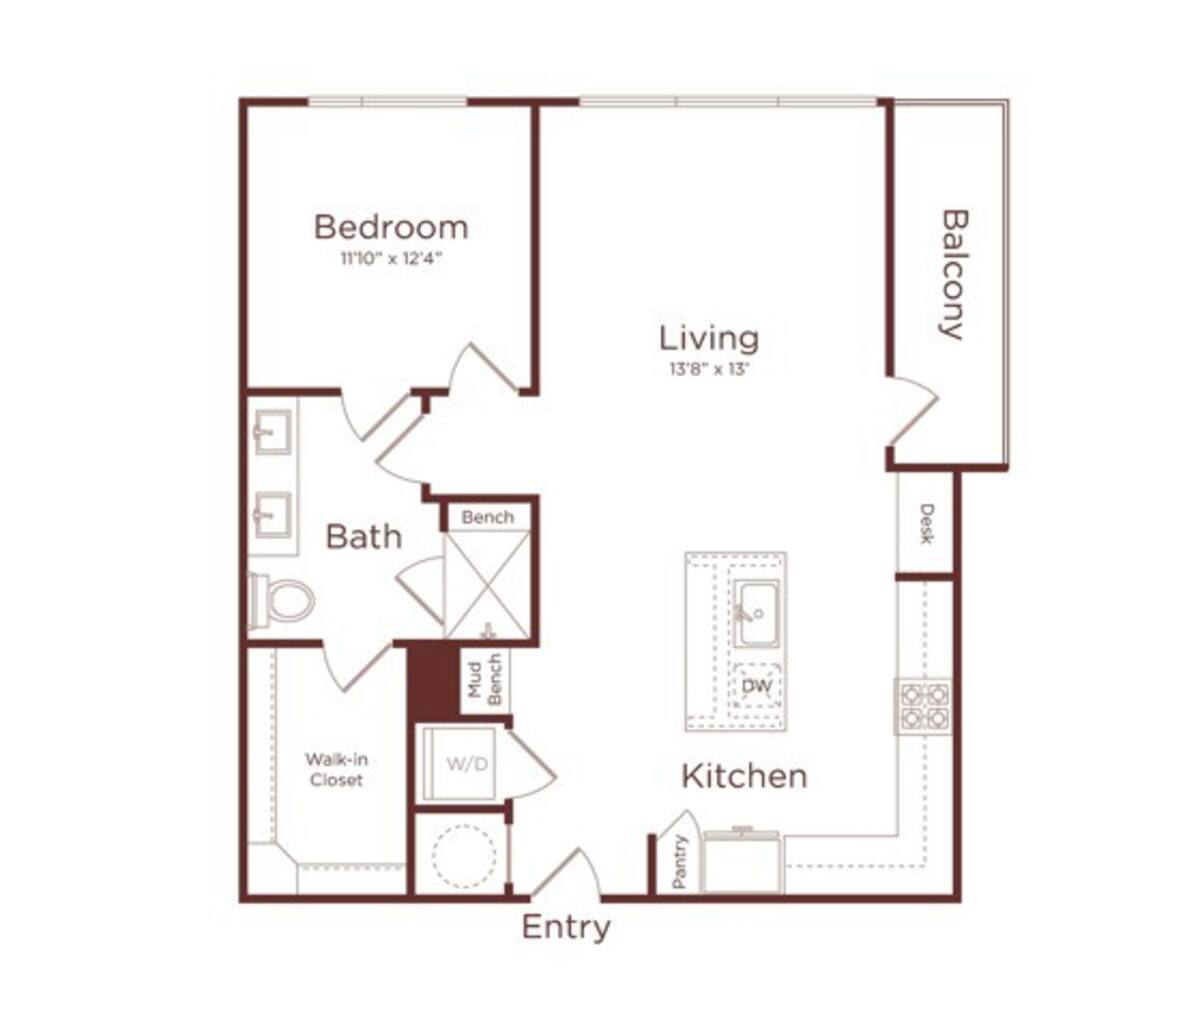 Floorplan diagram for A2B, showing 1 bedroom